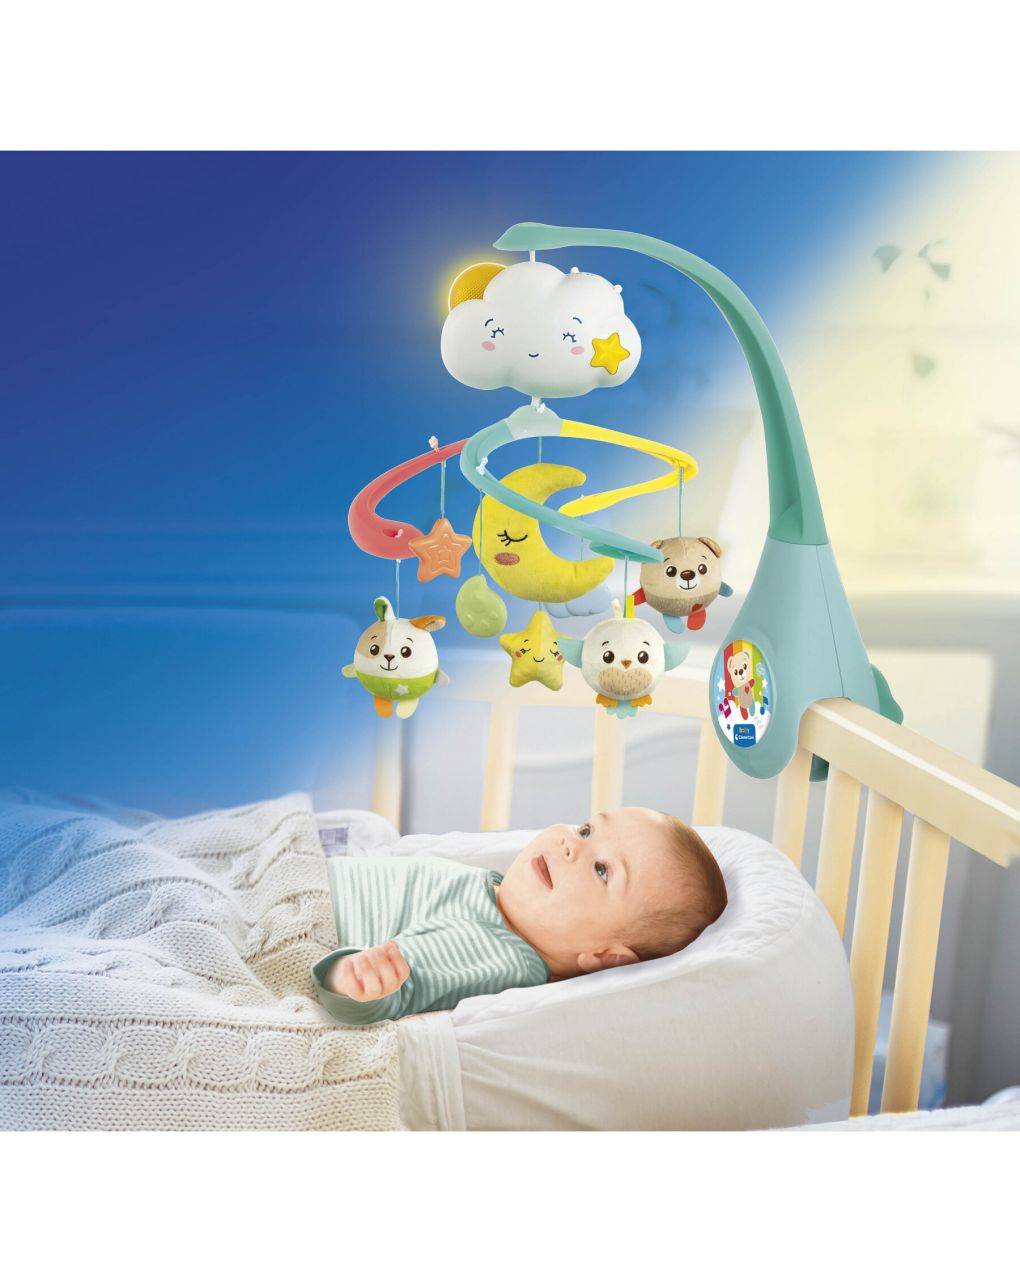 Bebé clementoni - berço, berço ou berço móvel de sonho - Baby Clementoni